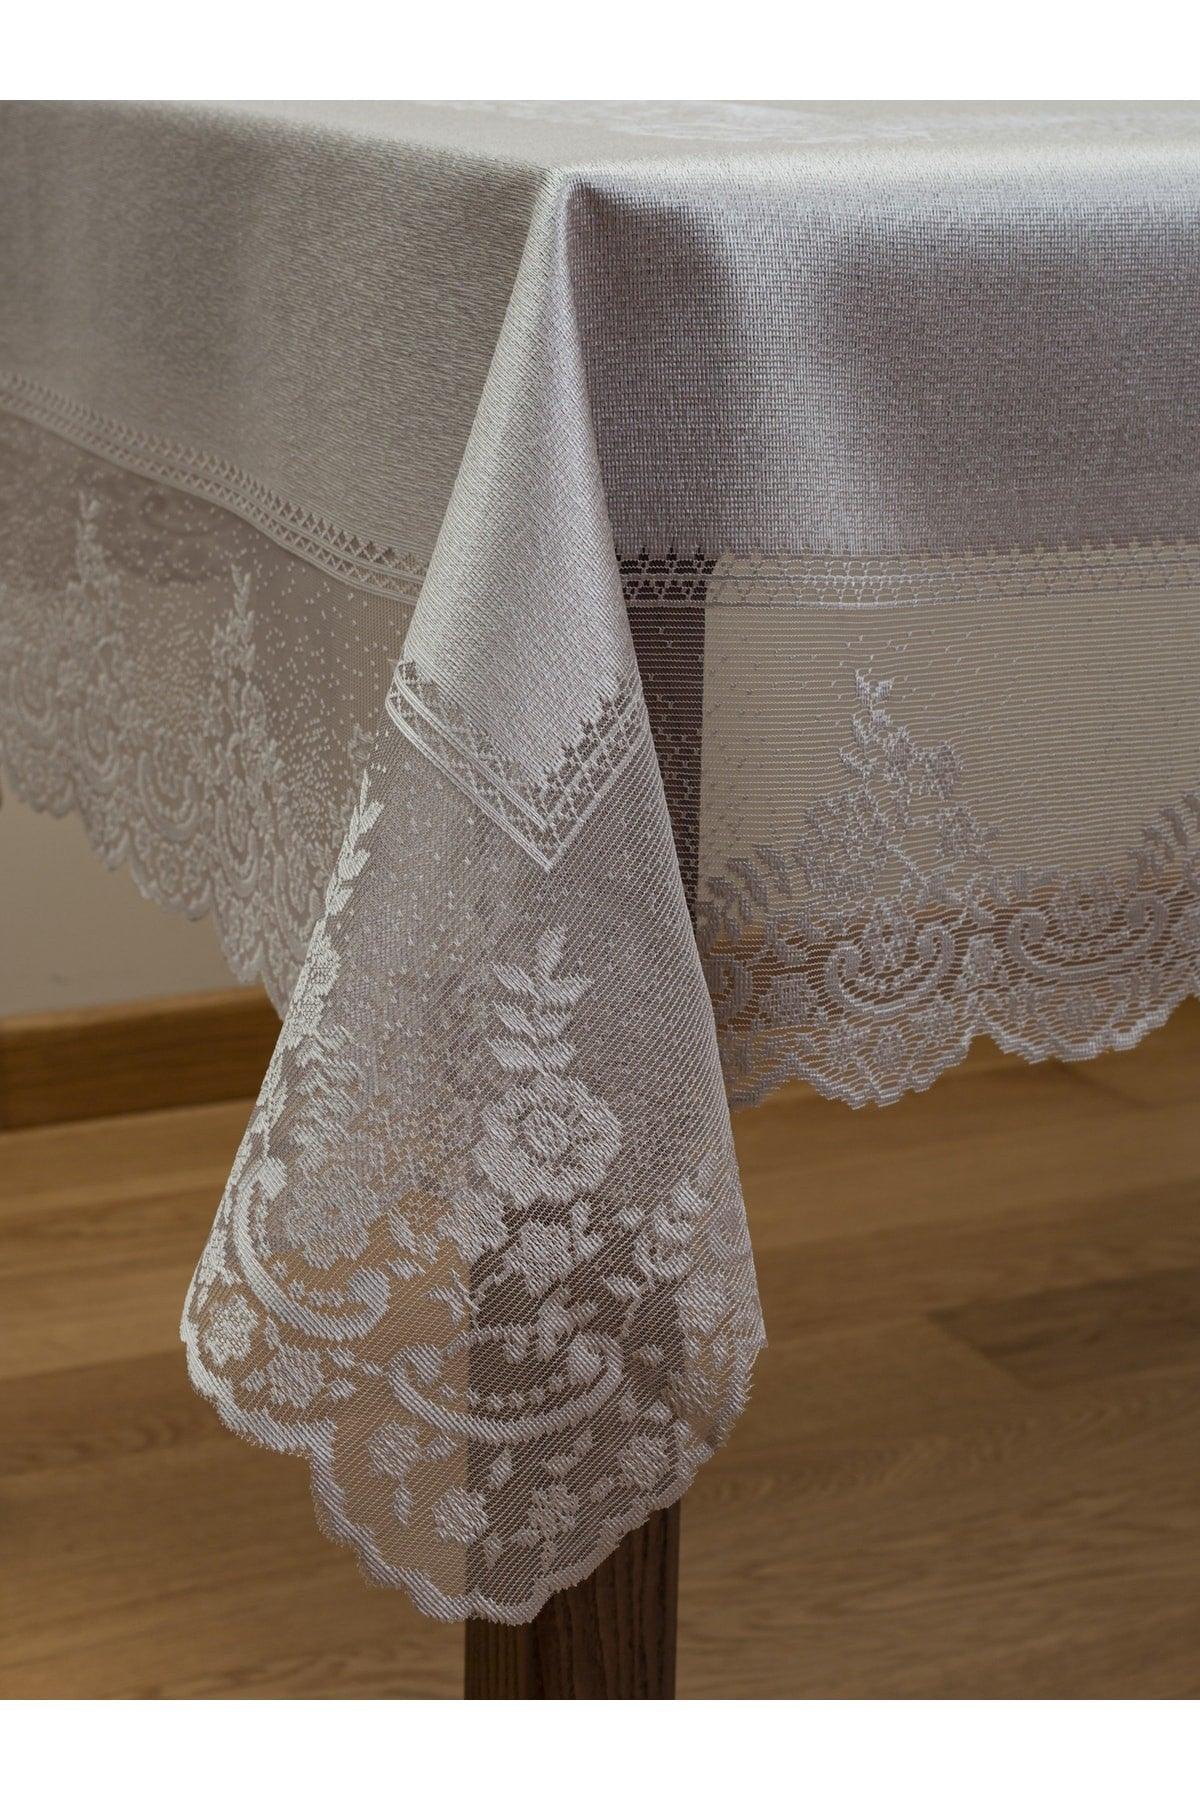 Tile Patterned Knitted Table Cloth - Swordslife